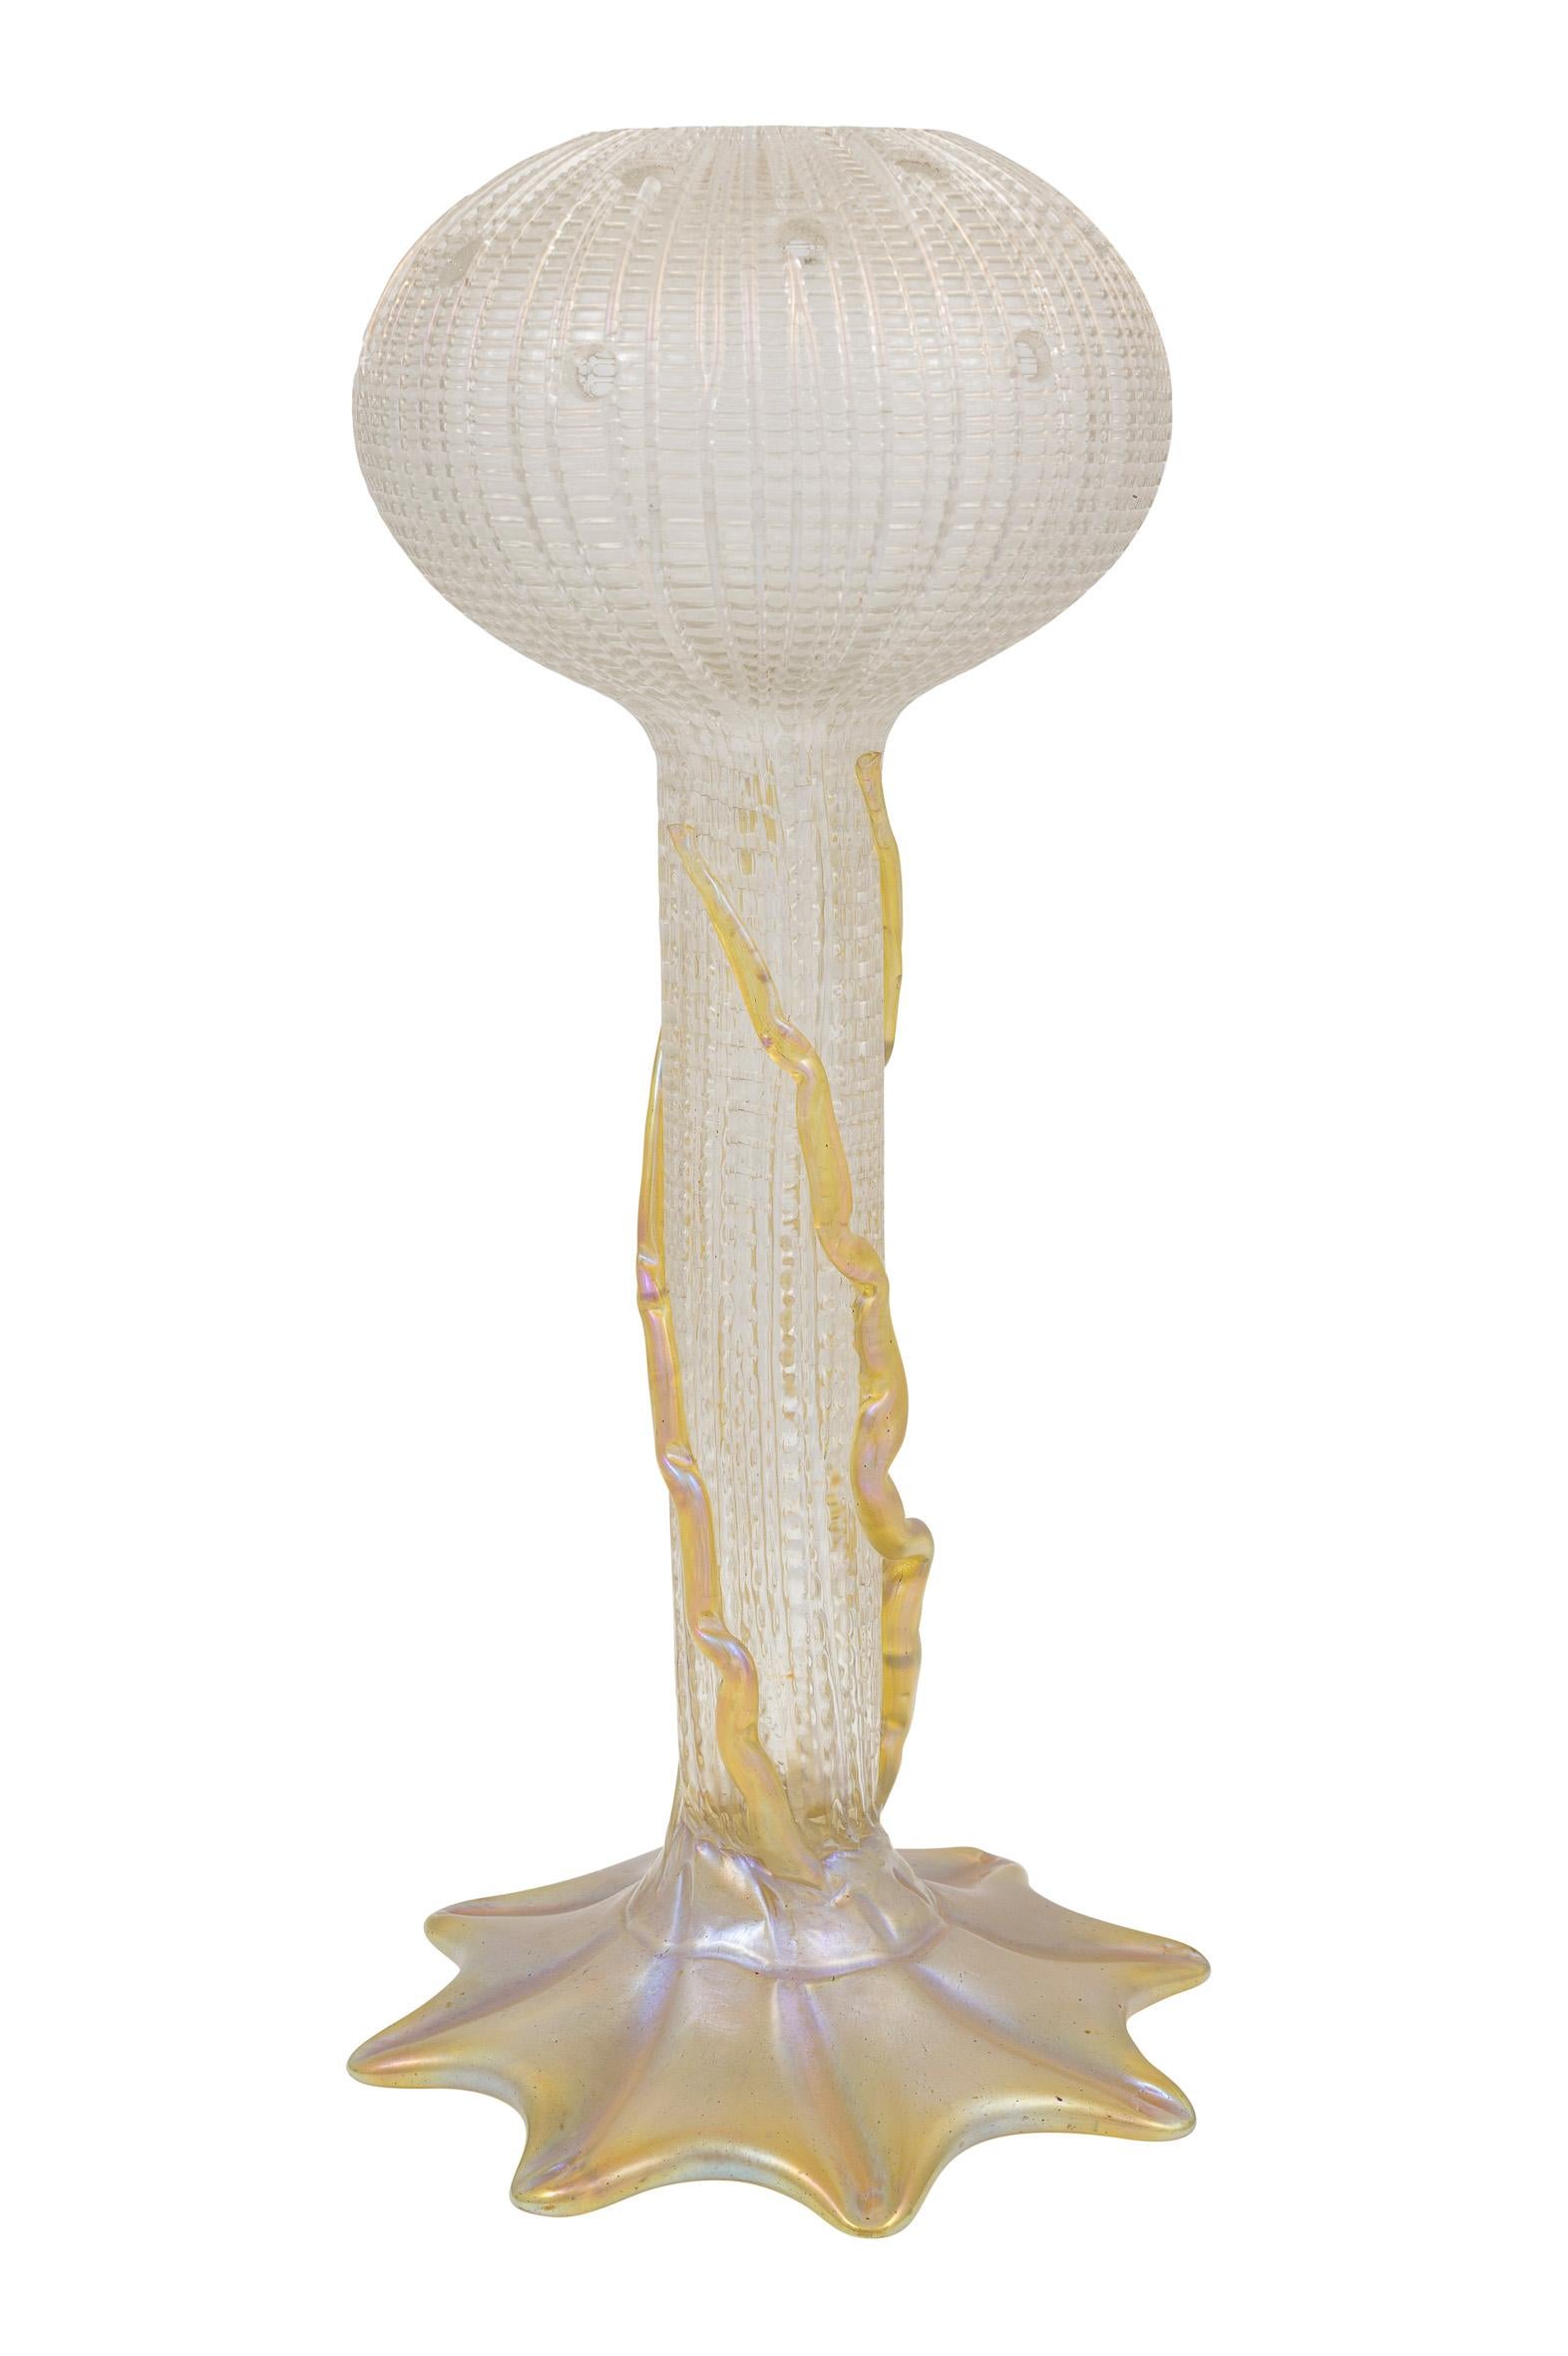 Flower vessel, glass vase, Adolf Beckert, manufactured by Johann Loetz Witwe, ca. 1905/6, Art Nouveau, Jugendstil, Art Deco, art glass, iridescent glass, white, gold

Technique: Glass, mold blown, free formed, reduced and iridescent